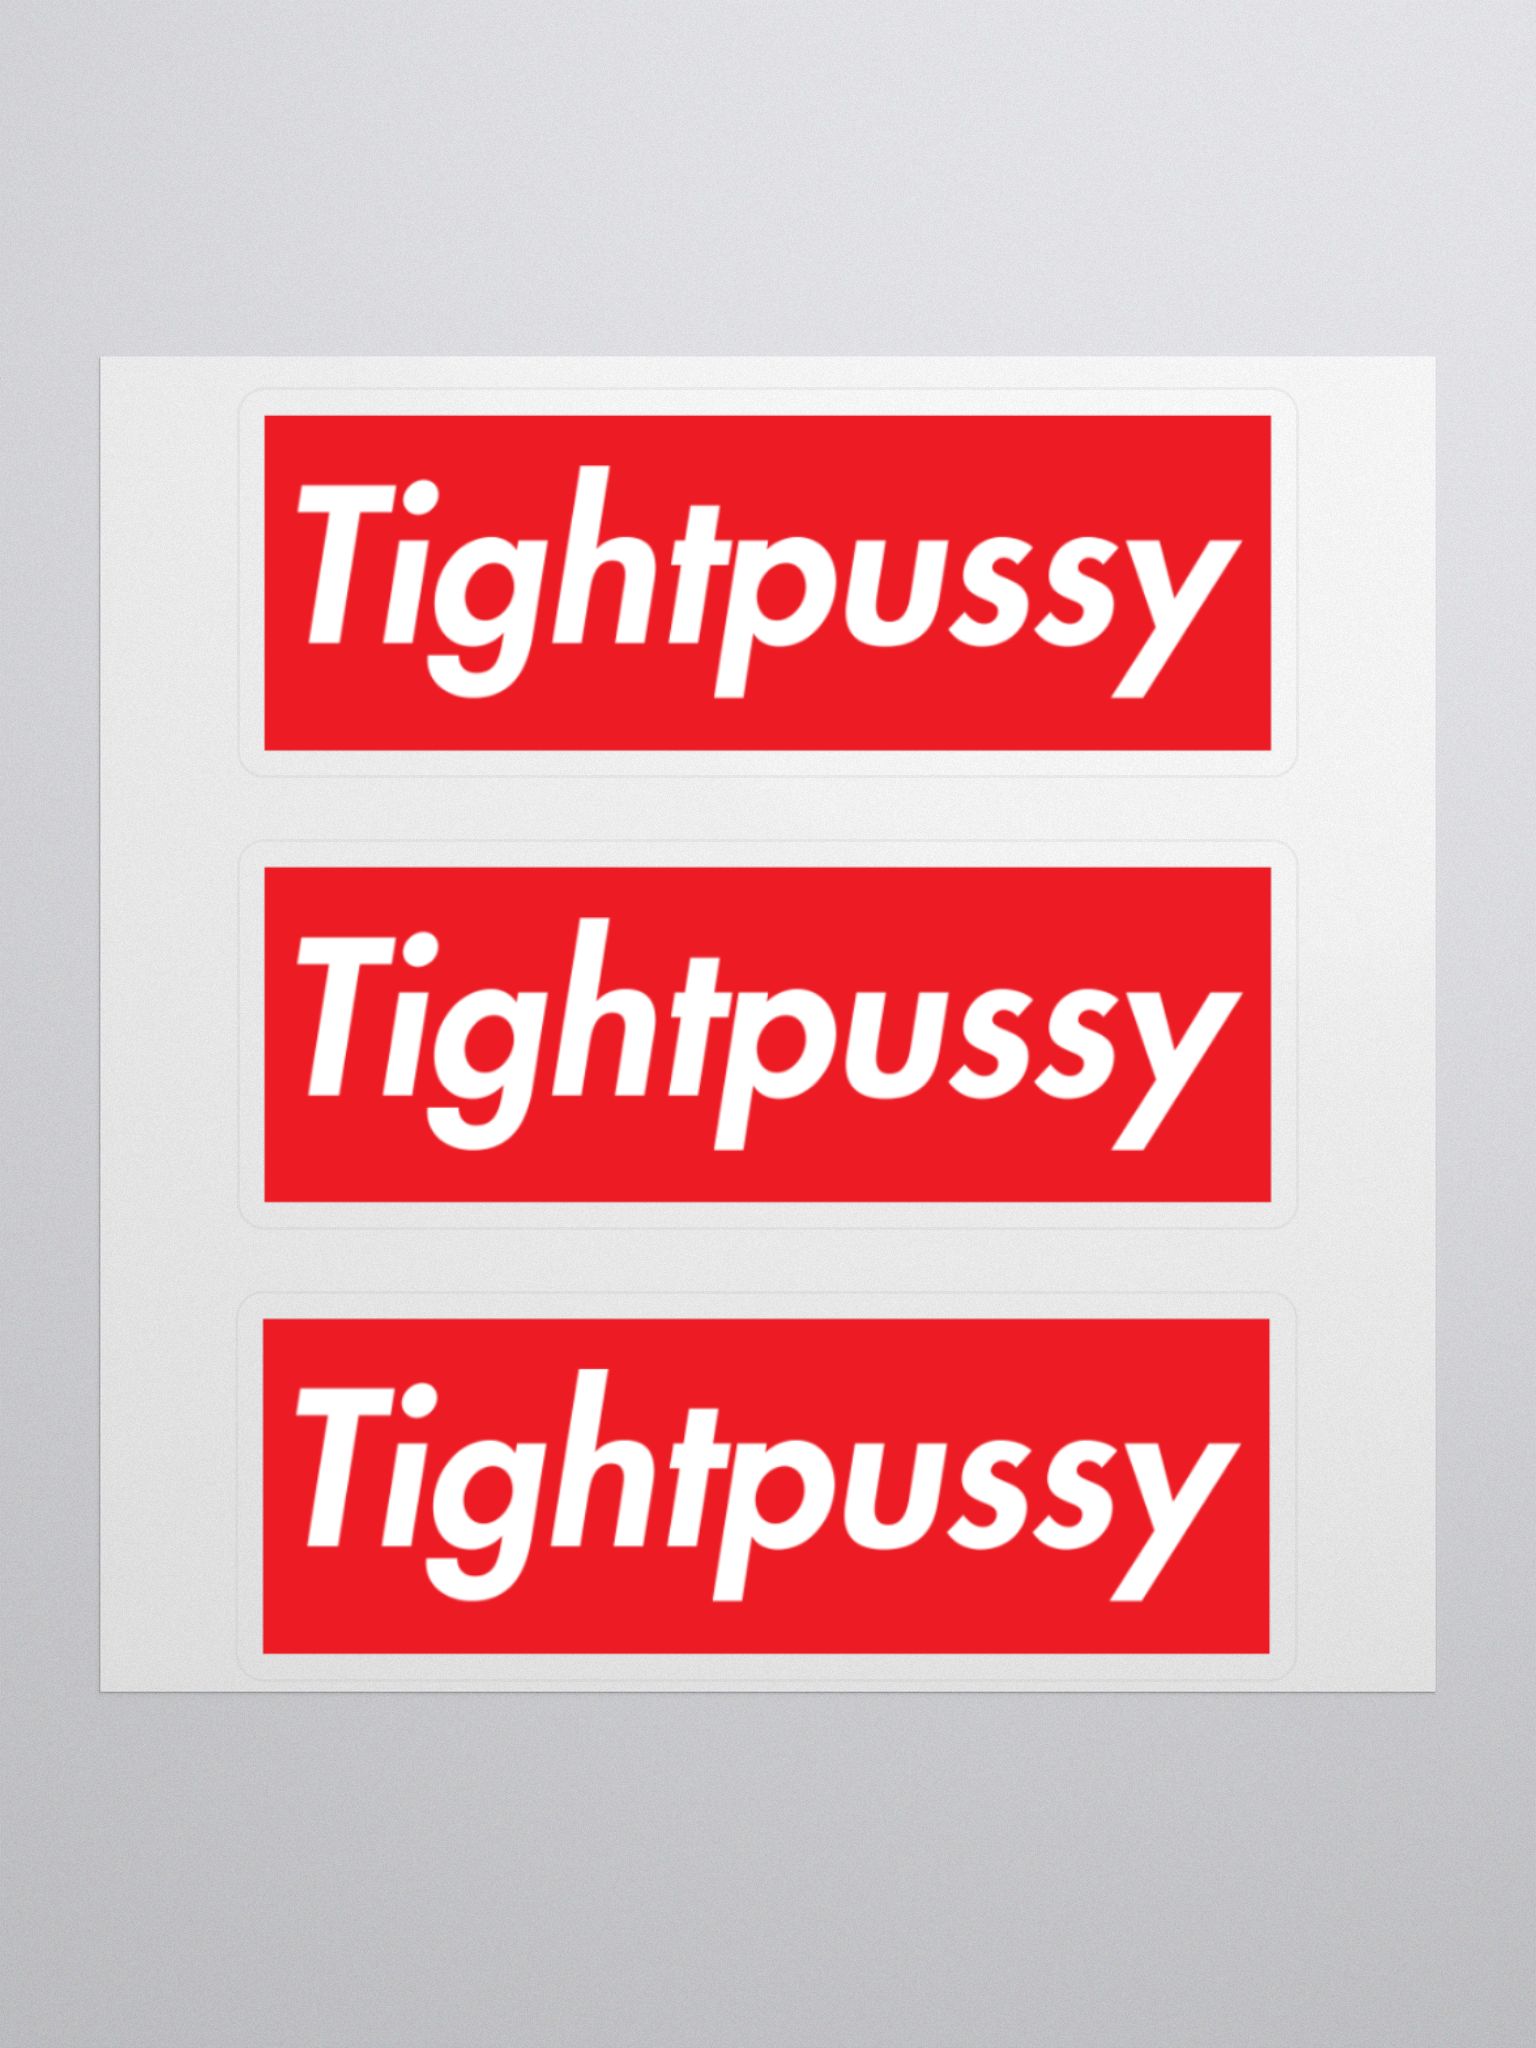 Tightpussys